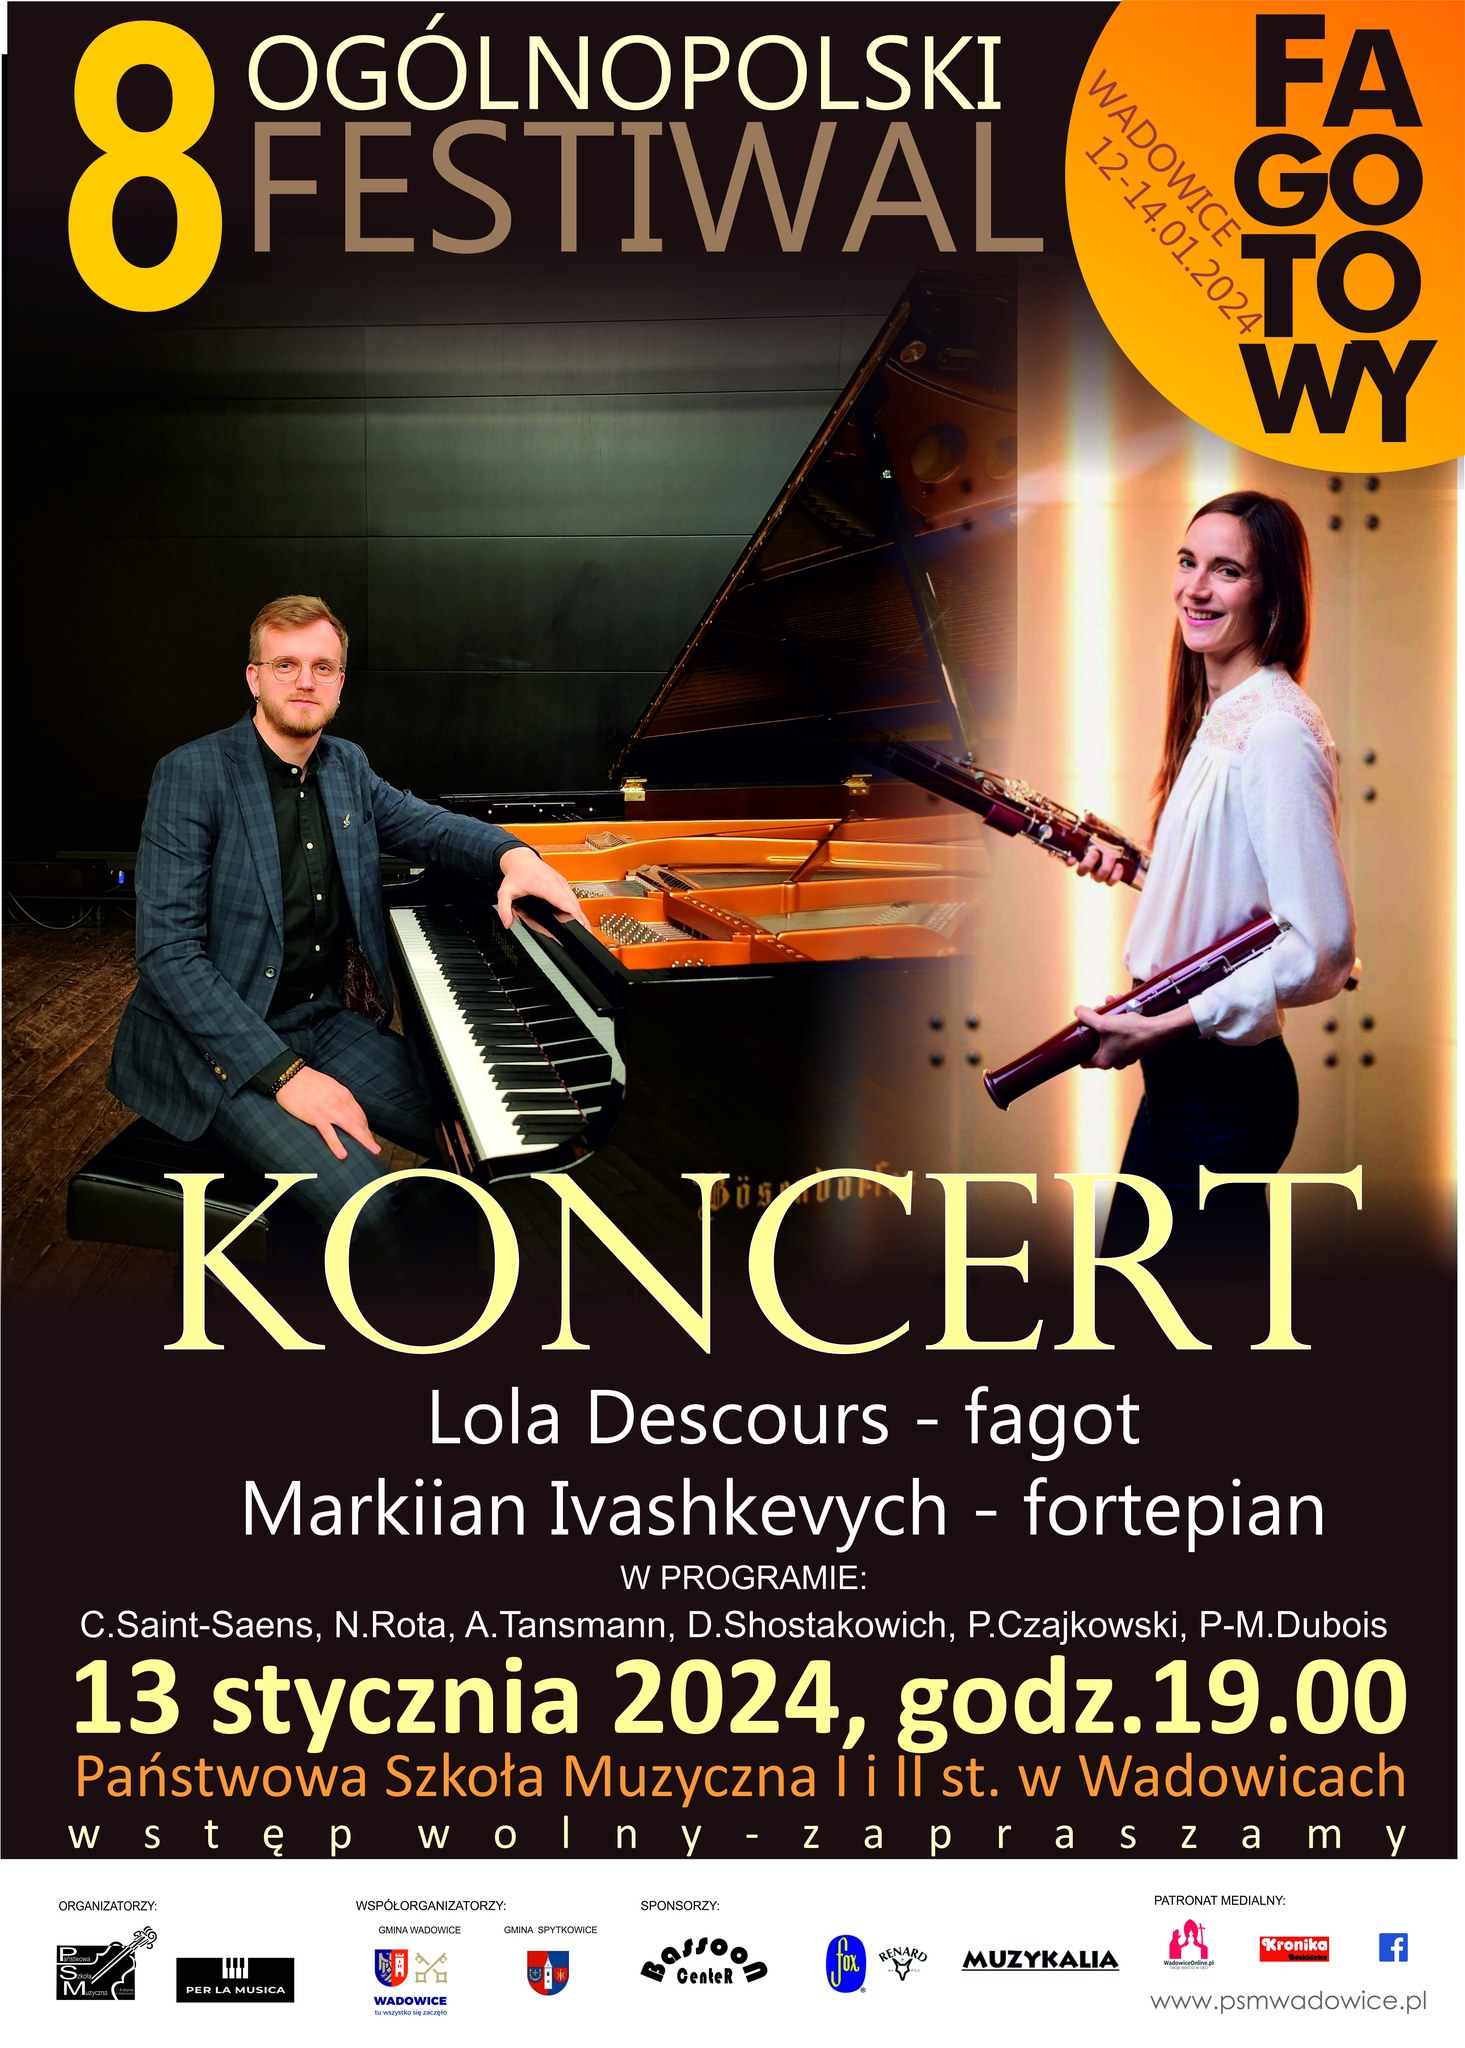 Koncert Lola Descours i Markiian Ivashkevych 13.01.2023